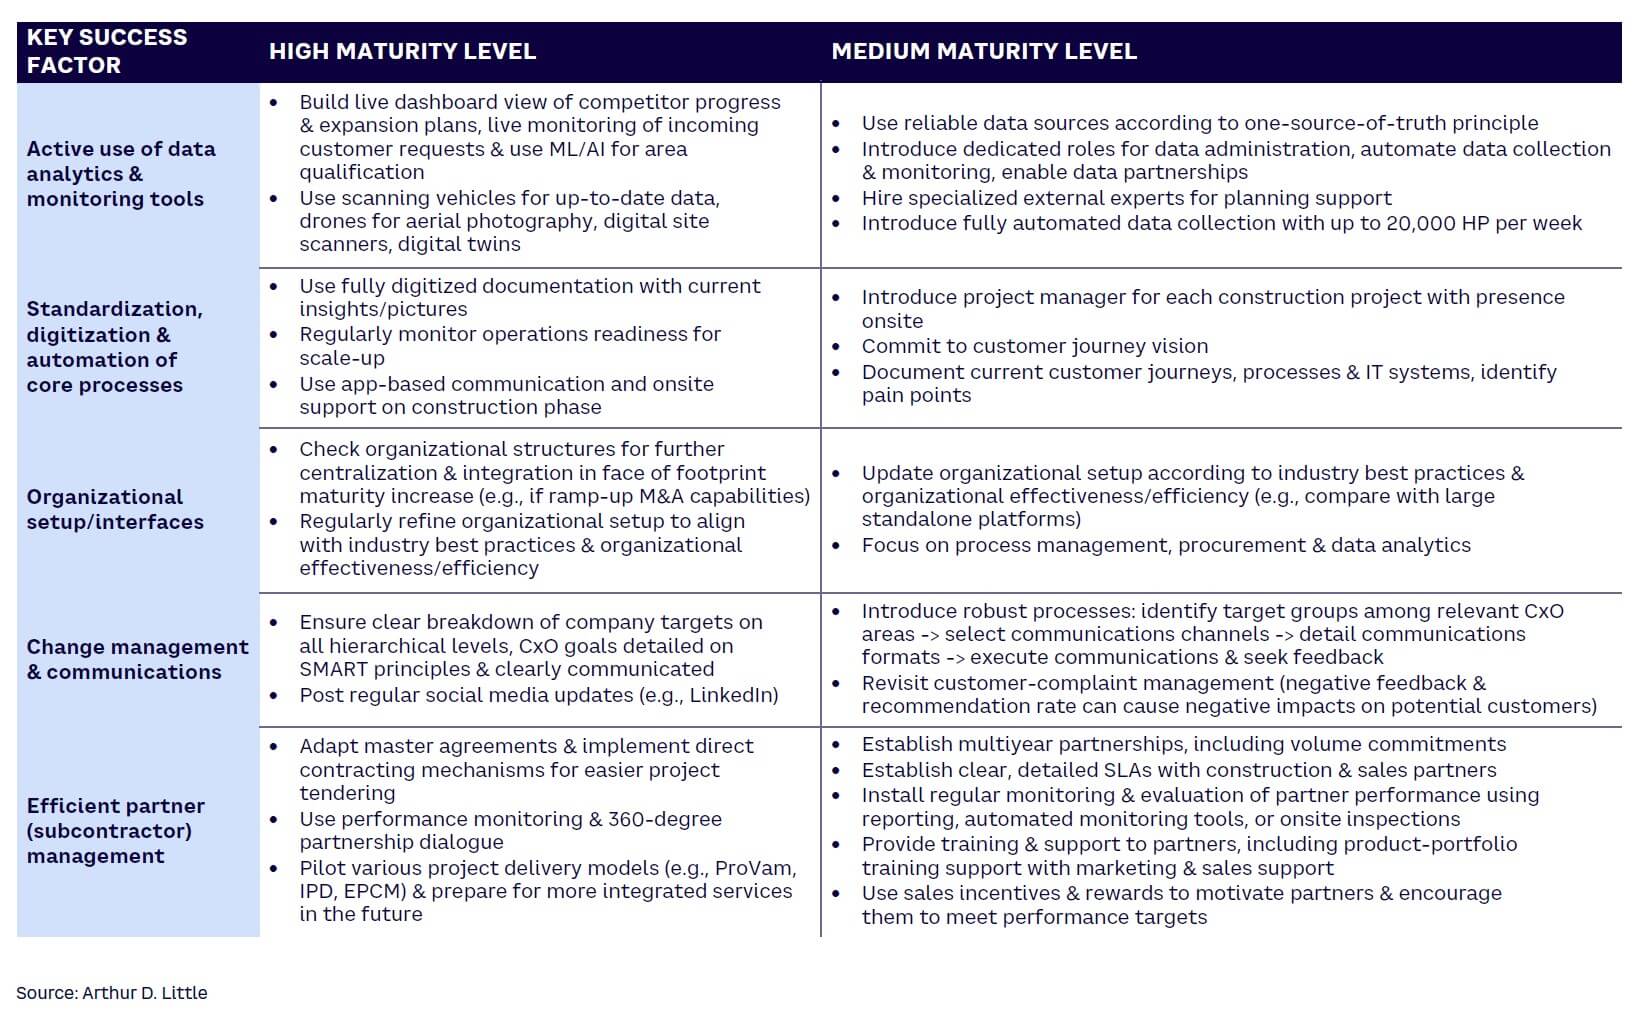 Table 3. Key success factors depending on maturity level